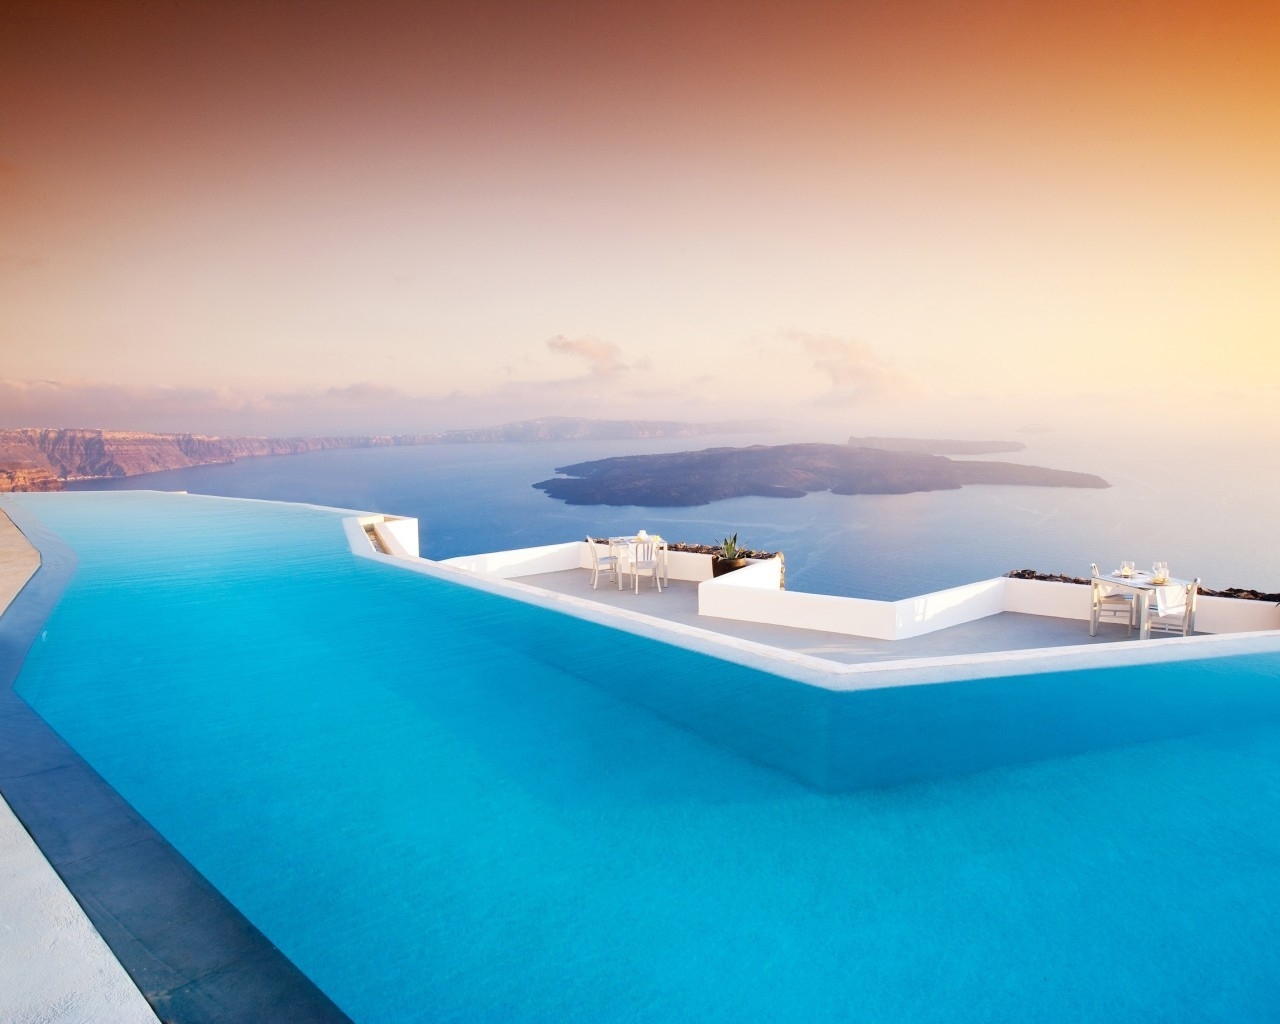 Santorini Pool for 1280 x 1024 resolution